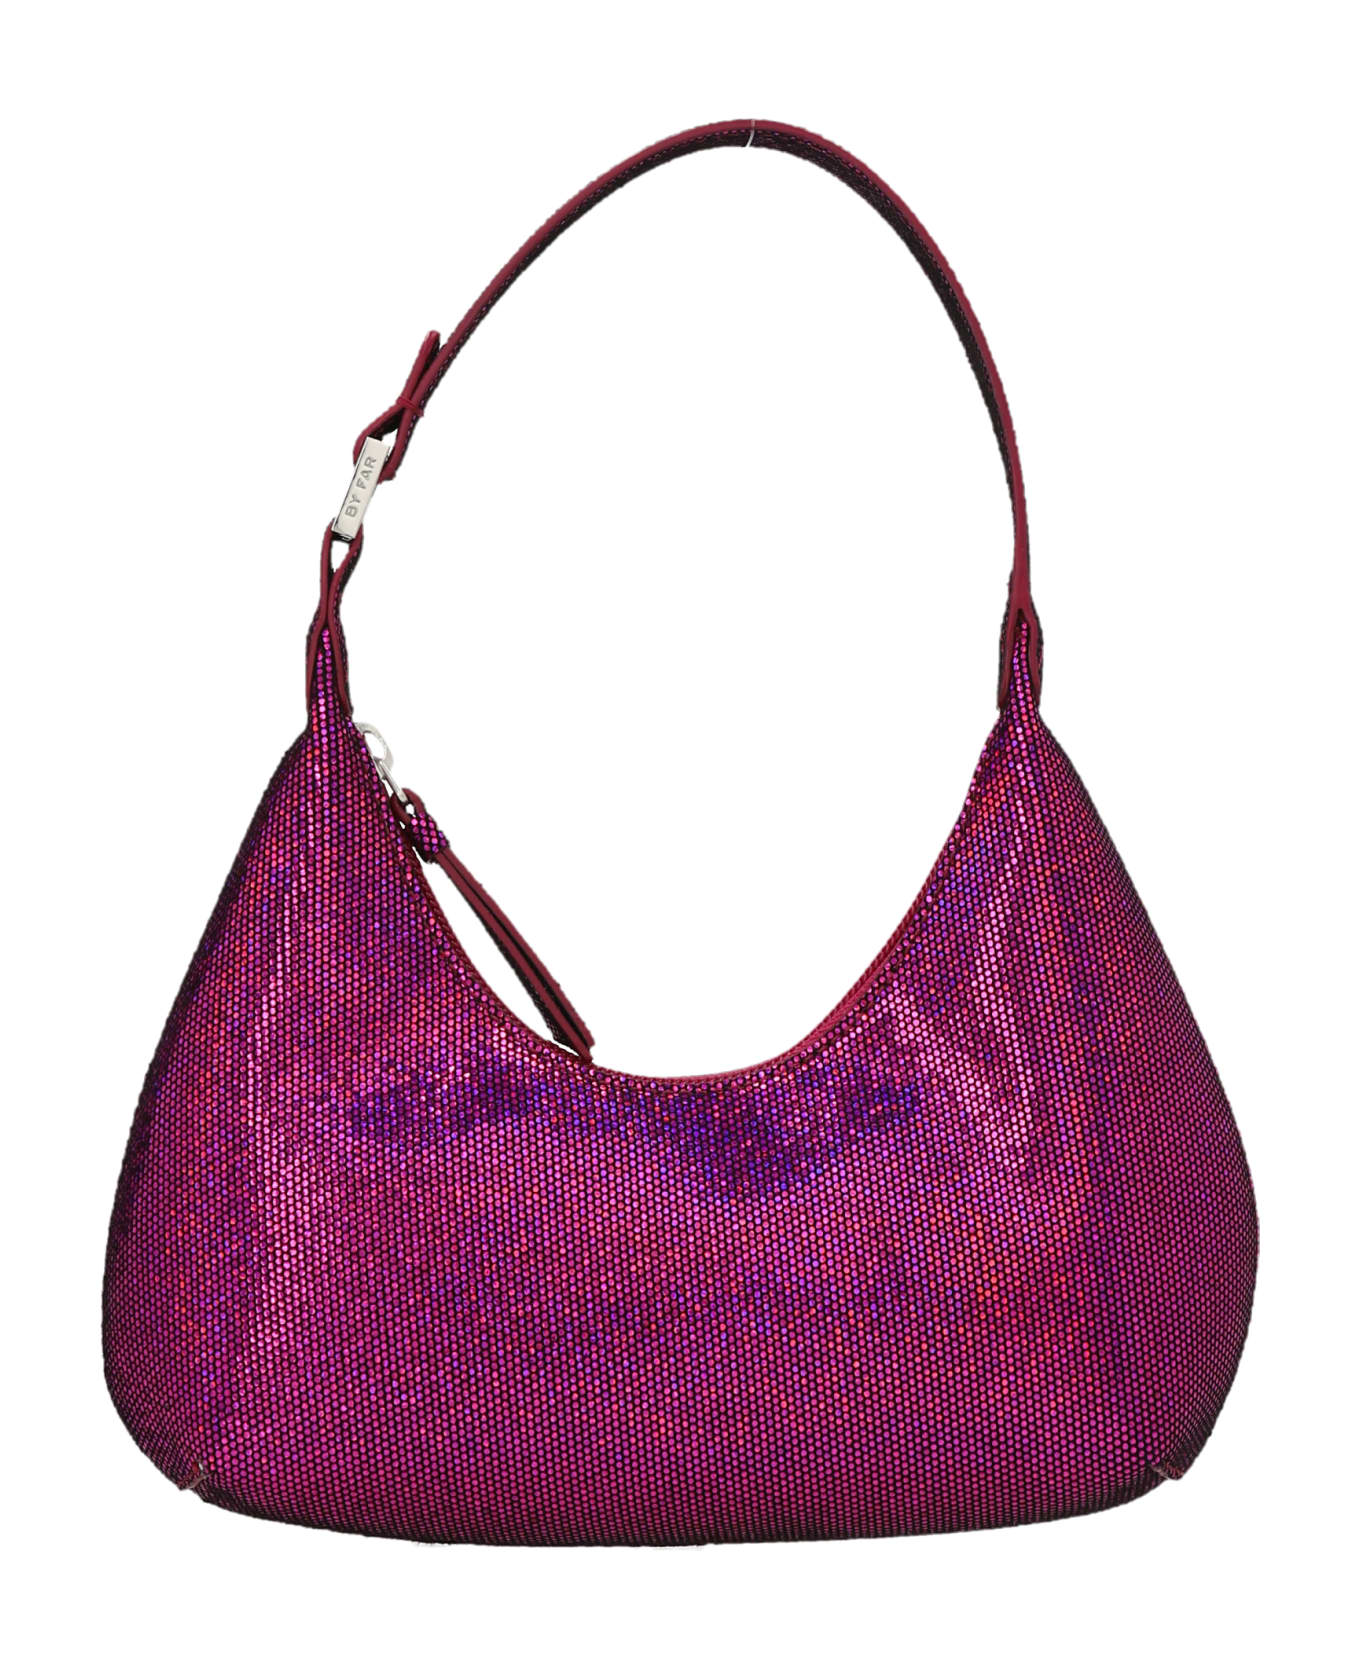 BY FAR 'baby Amber' Handbag - Purple